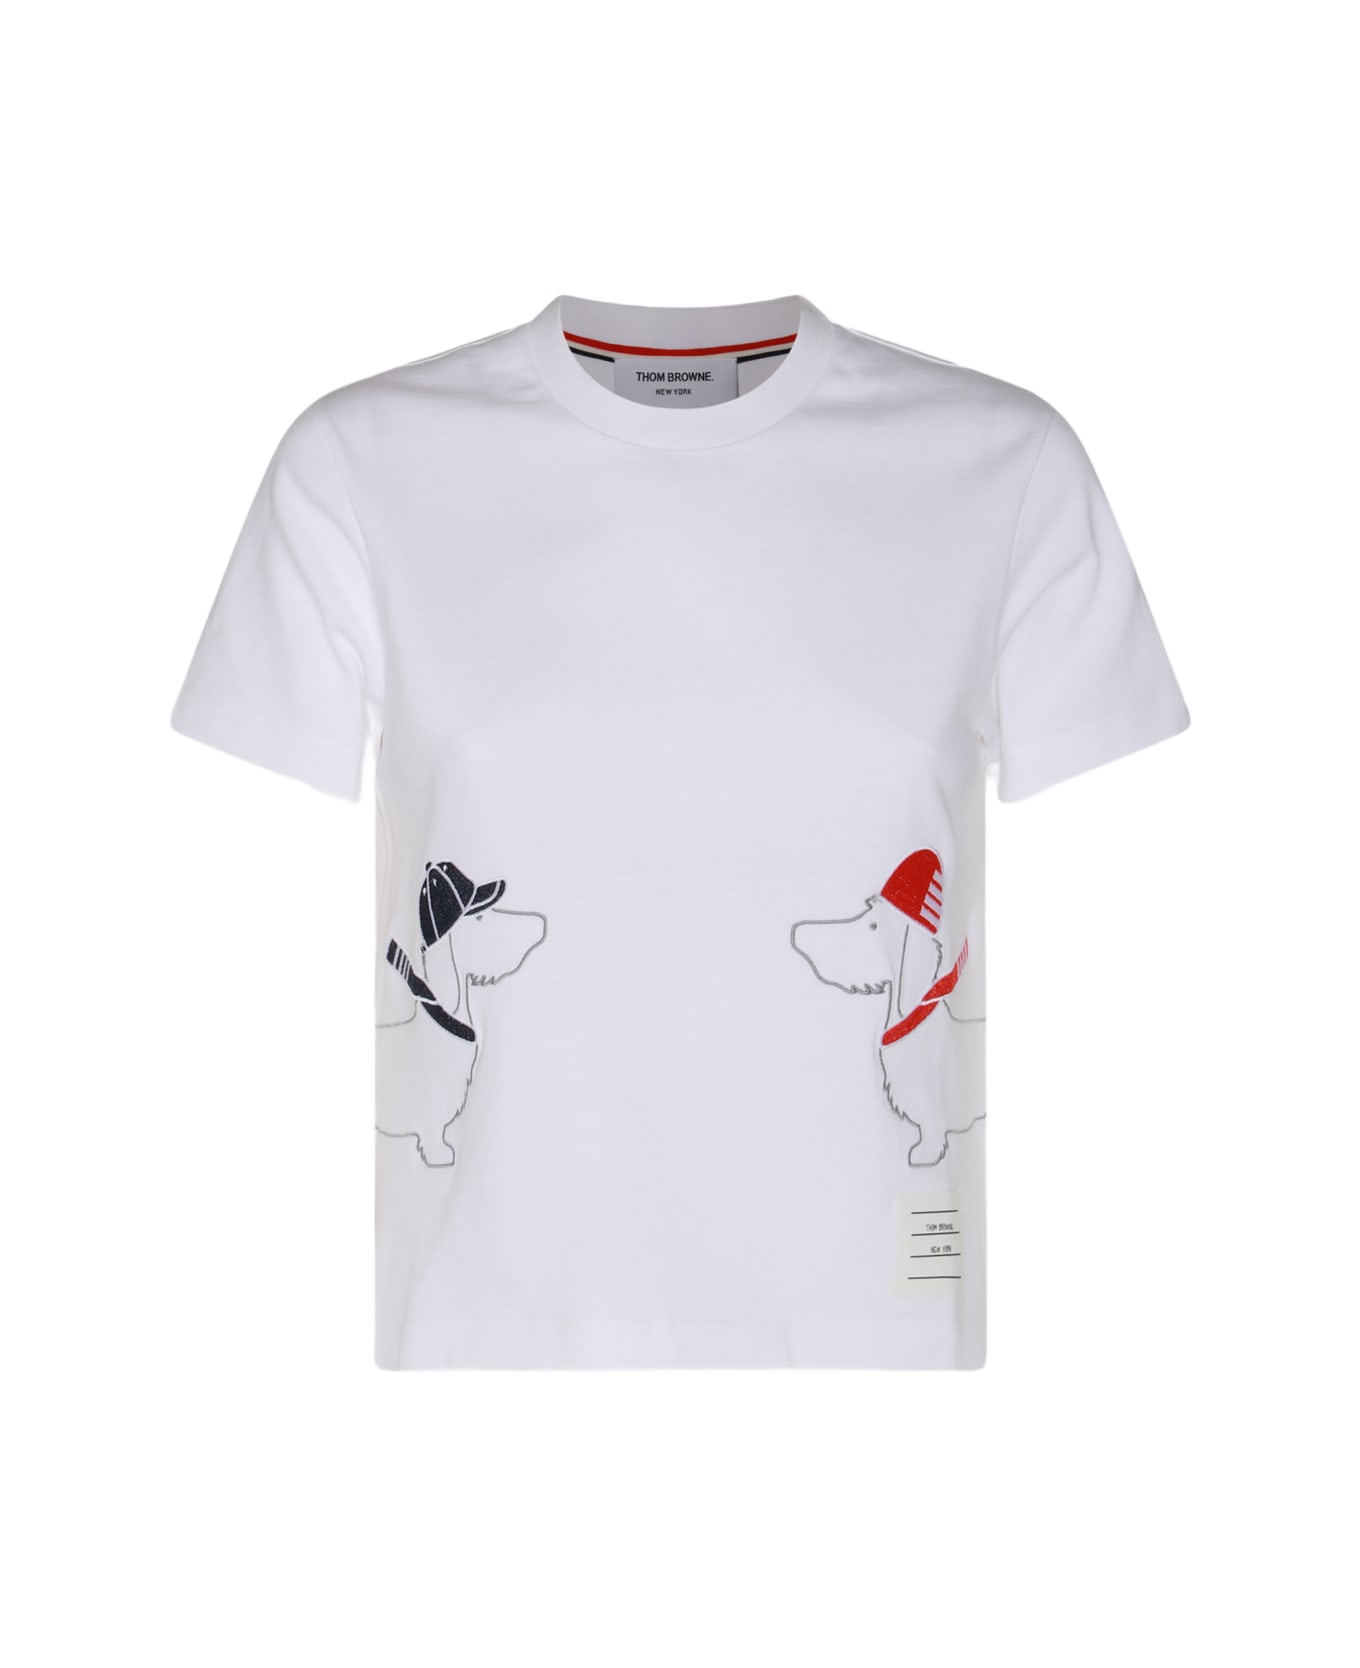 Thom Browne White Cotton T-shirt - White